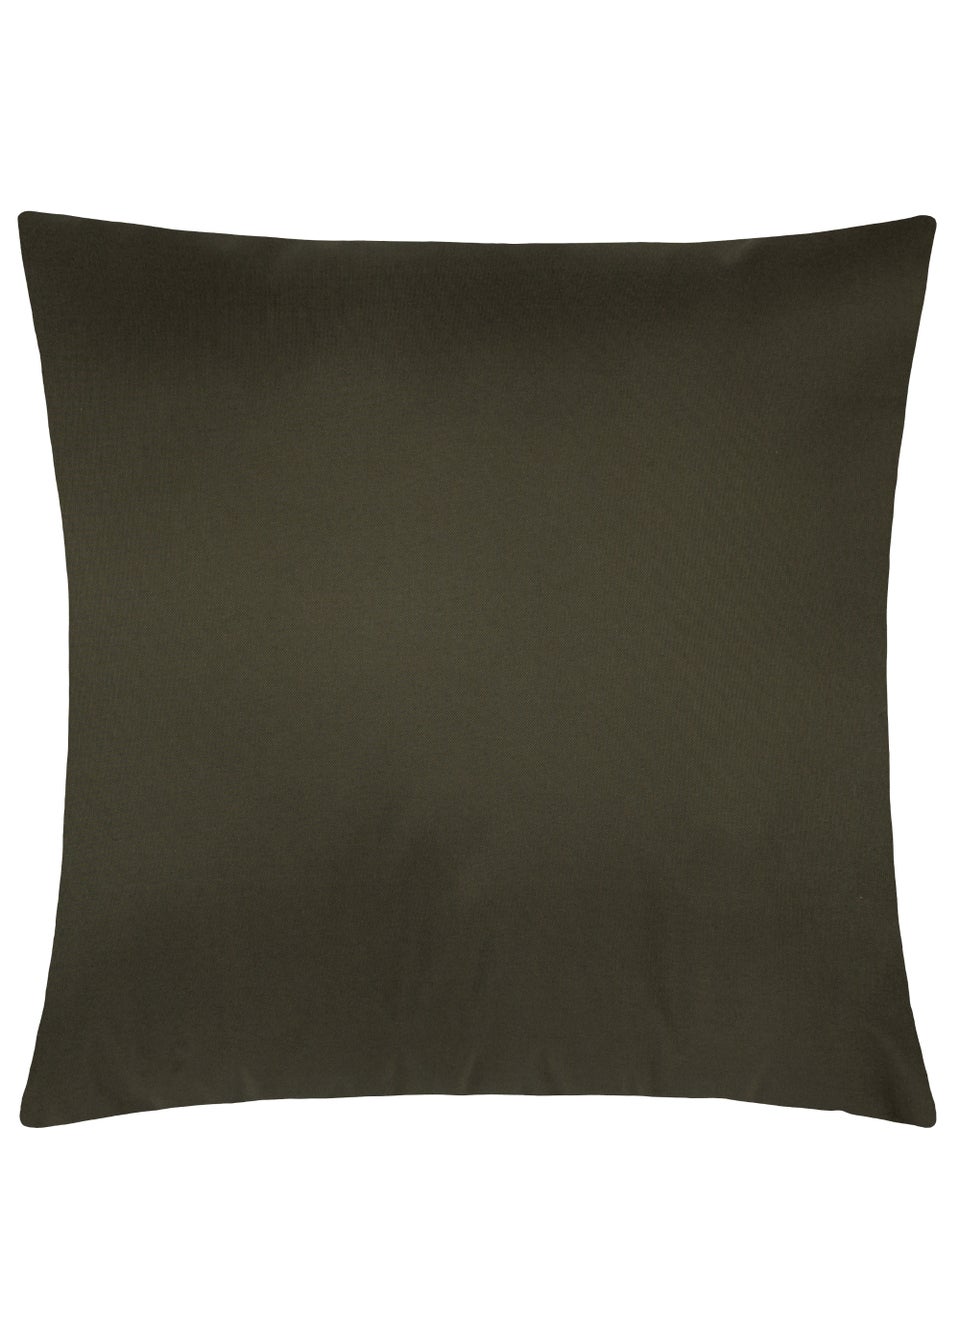 Evans Lichfield Grove Hedgehog Outdoor Filled Cushion (43cm x 43cm x 8cm)